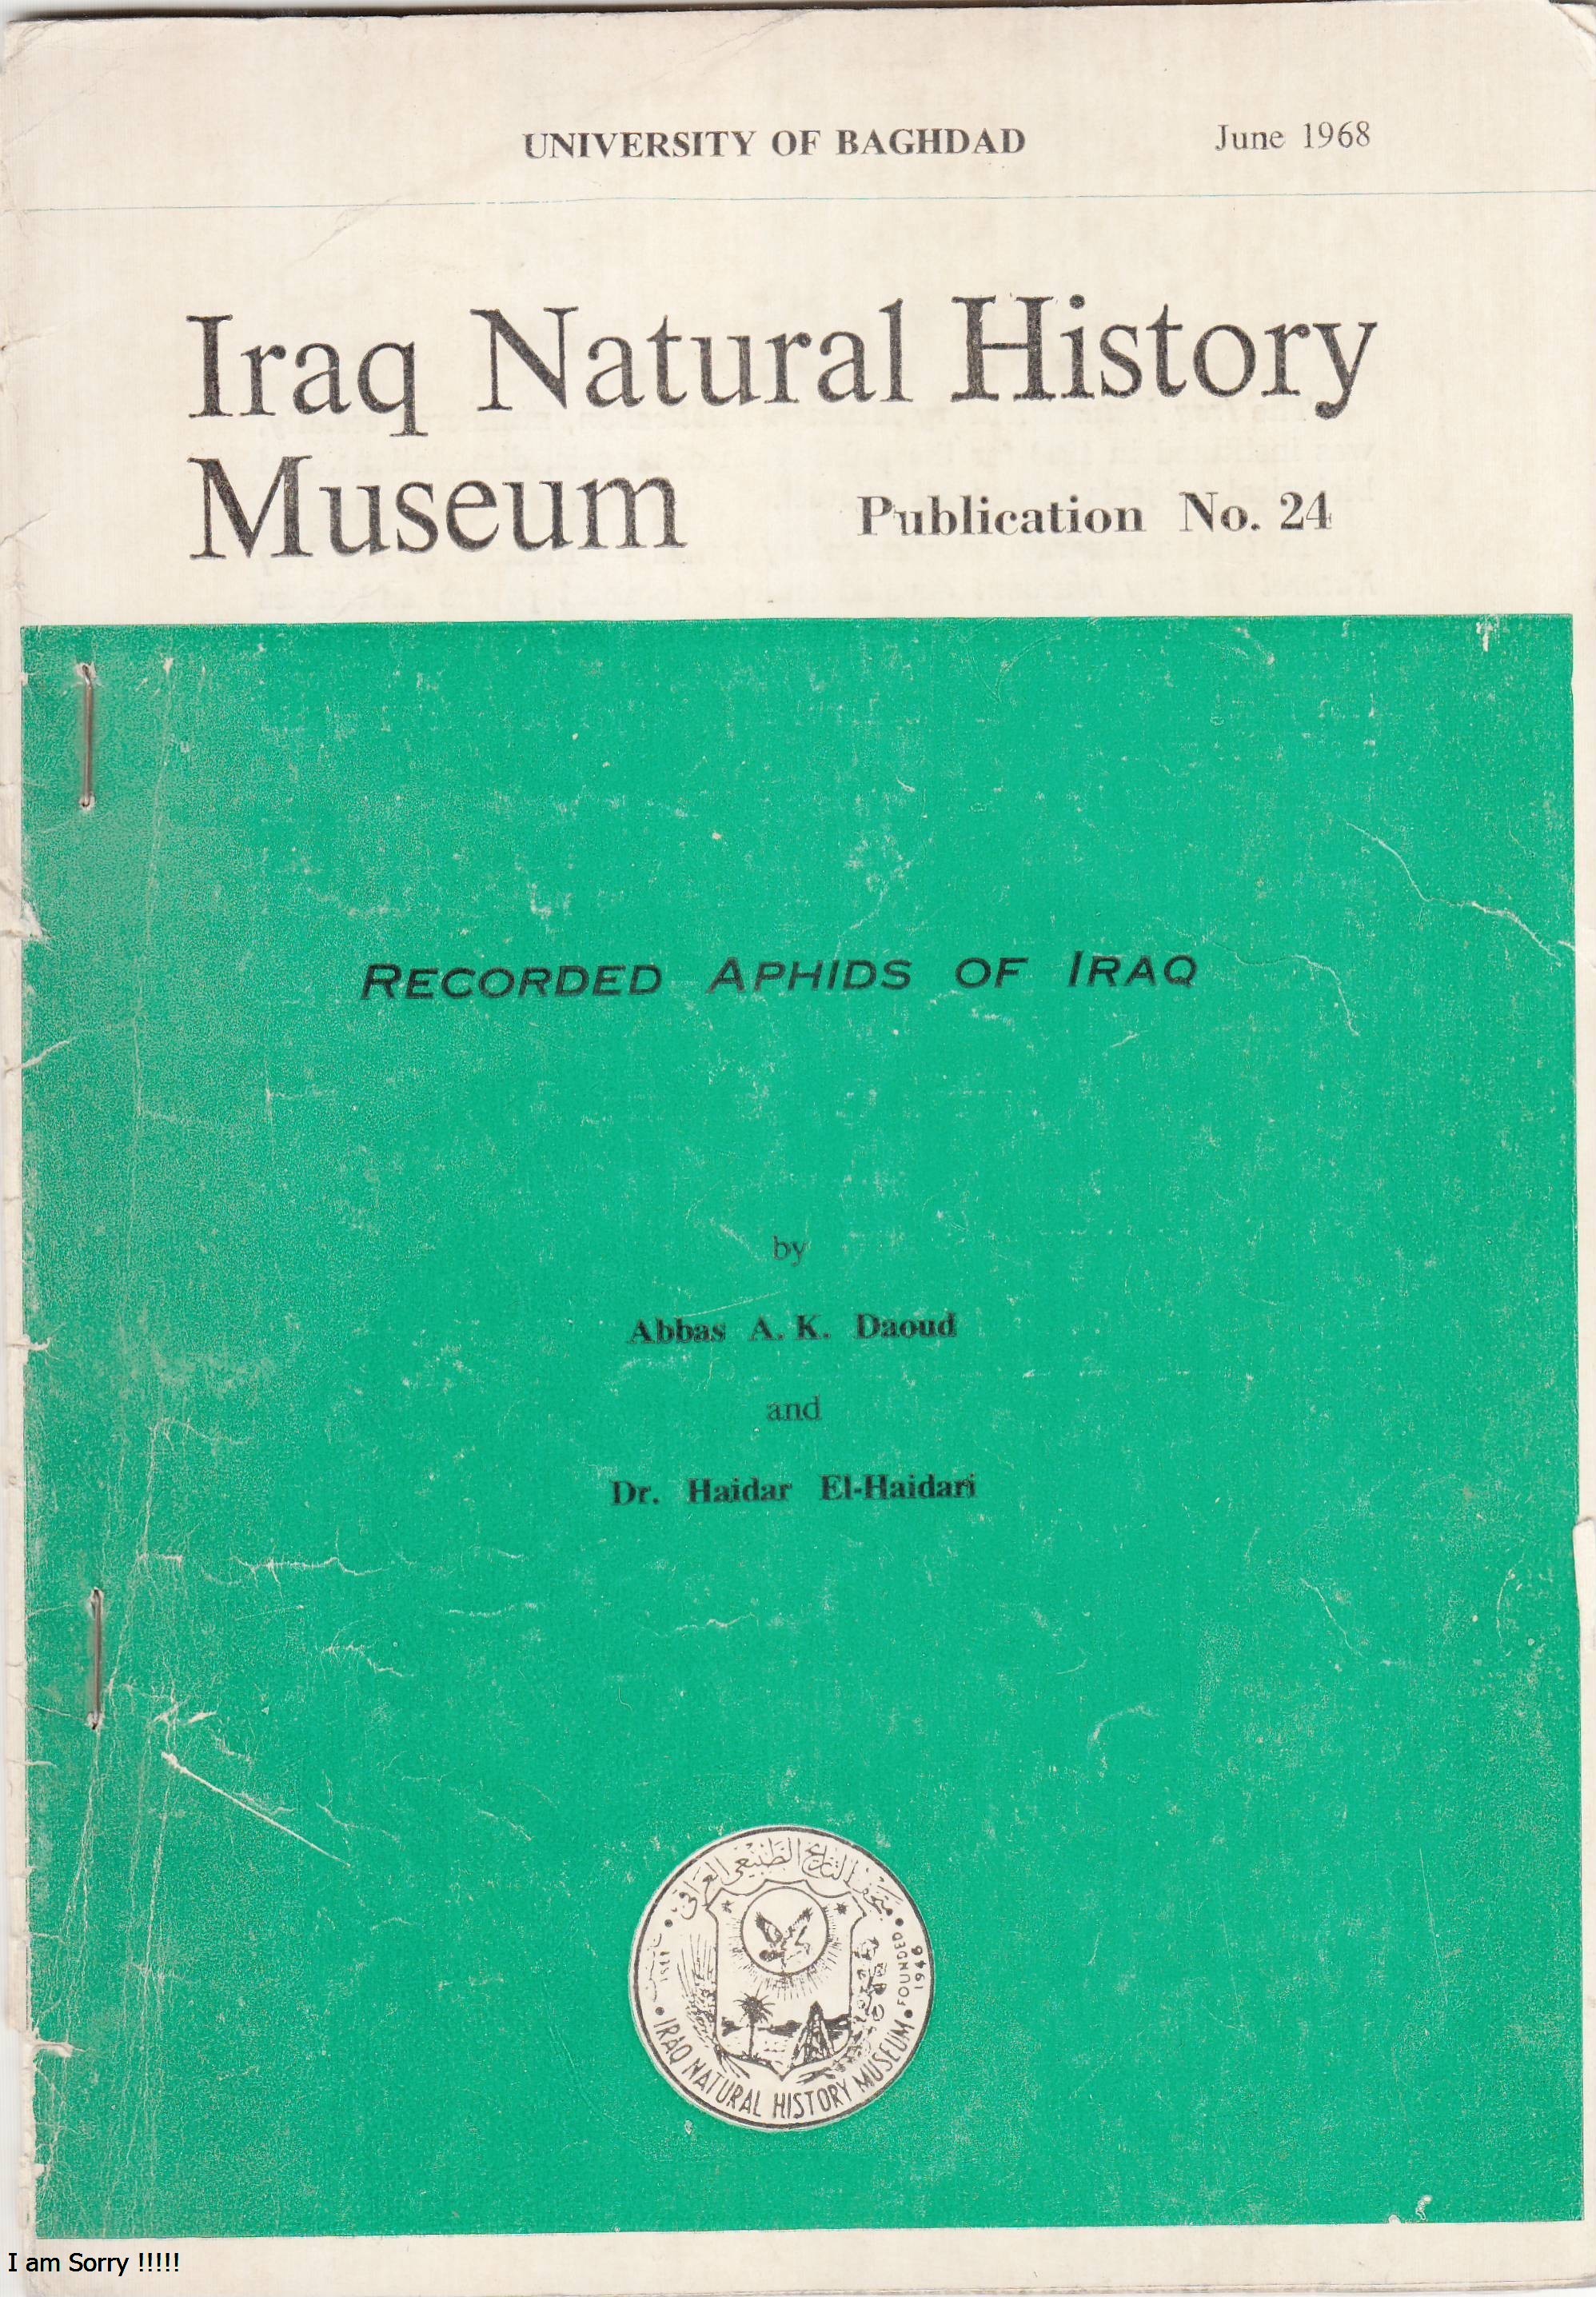 					معاينة عدد 24 (1968): Recorded Aphids of Iraq by ABBAS A. K. DAOUD AND DR. HAIDAR EL-HAIDARI , Iraq Nat.Hist. Mus, Baghdad, Iraq
				